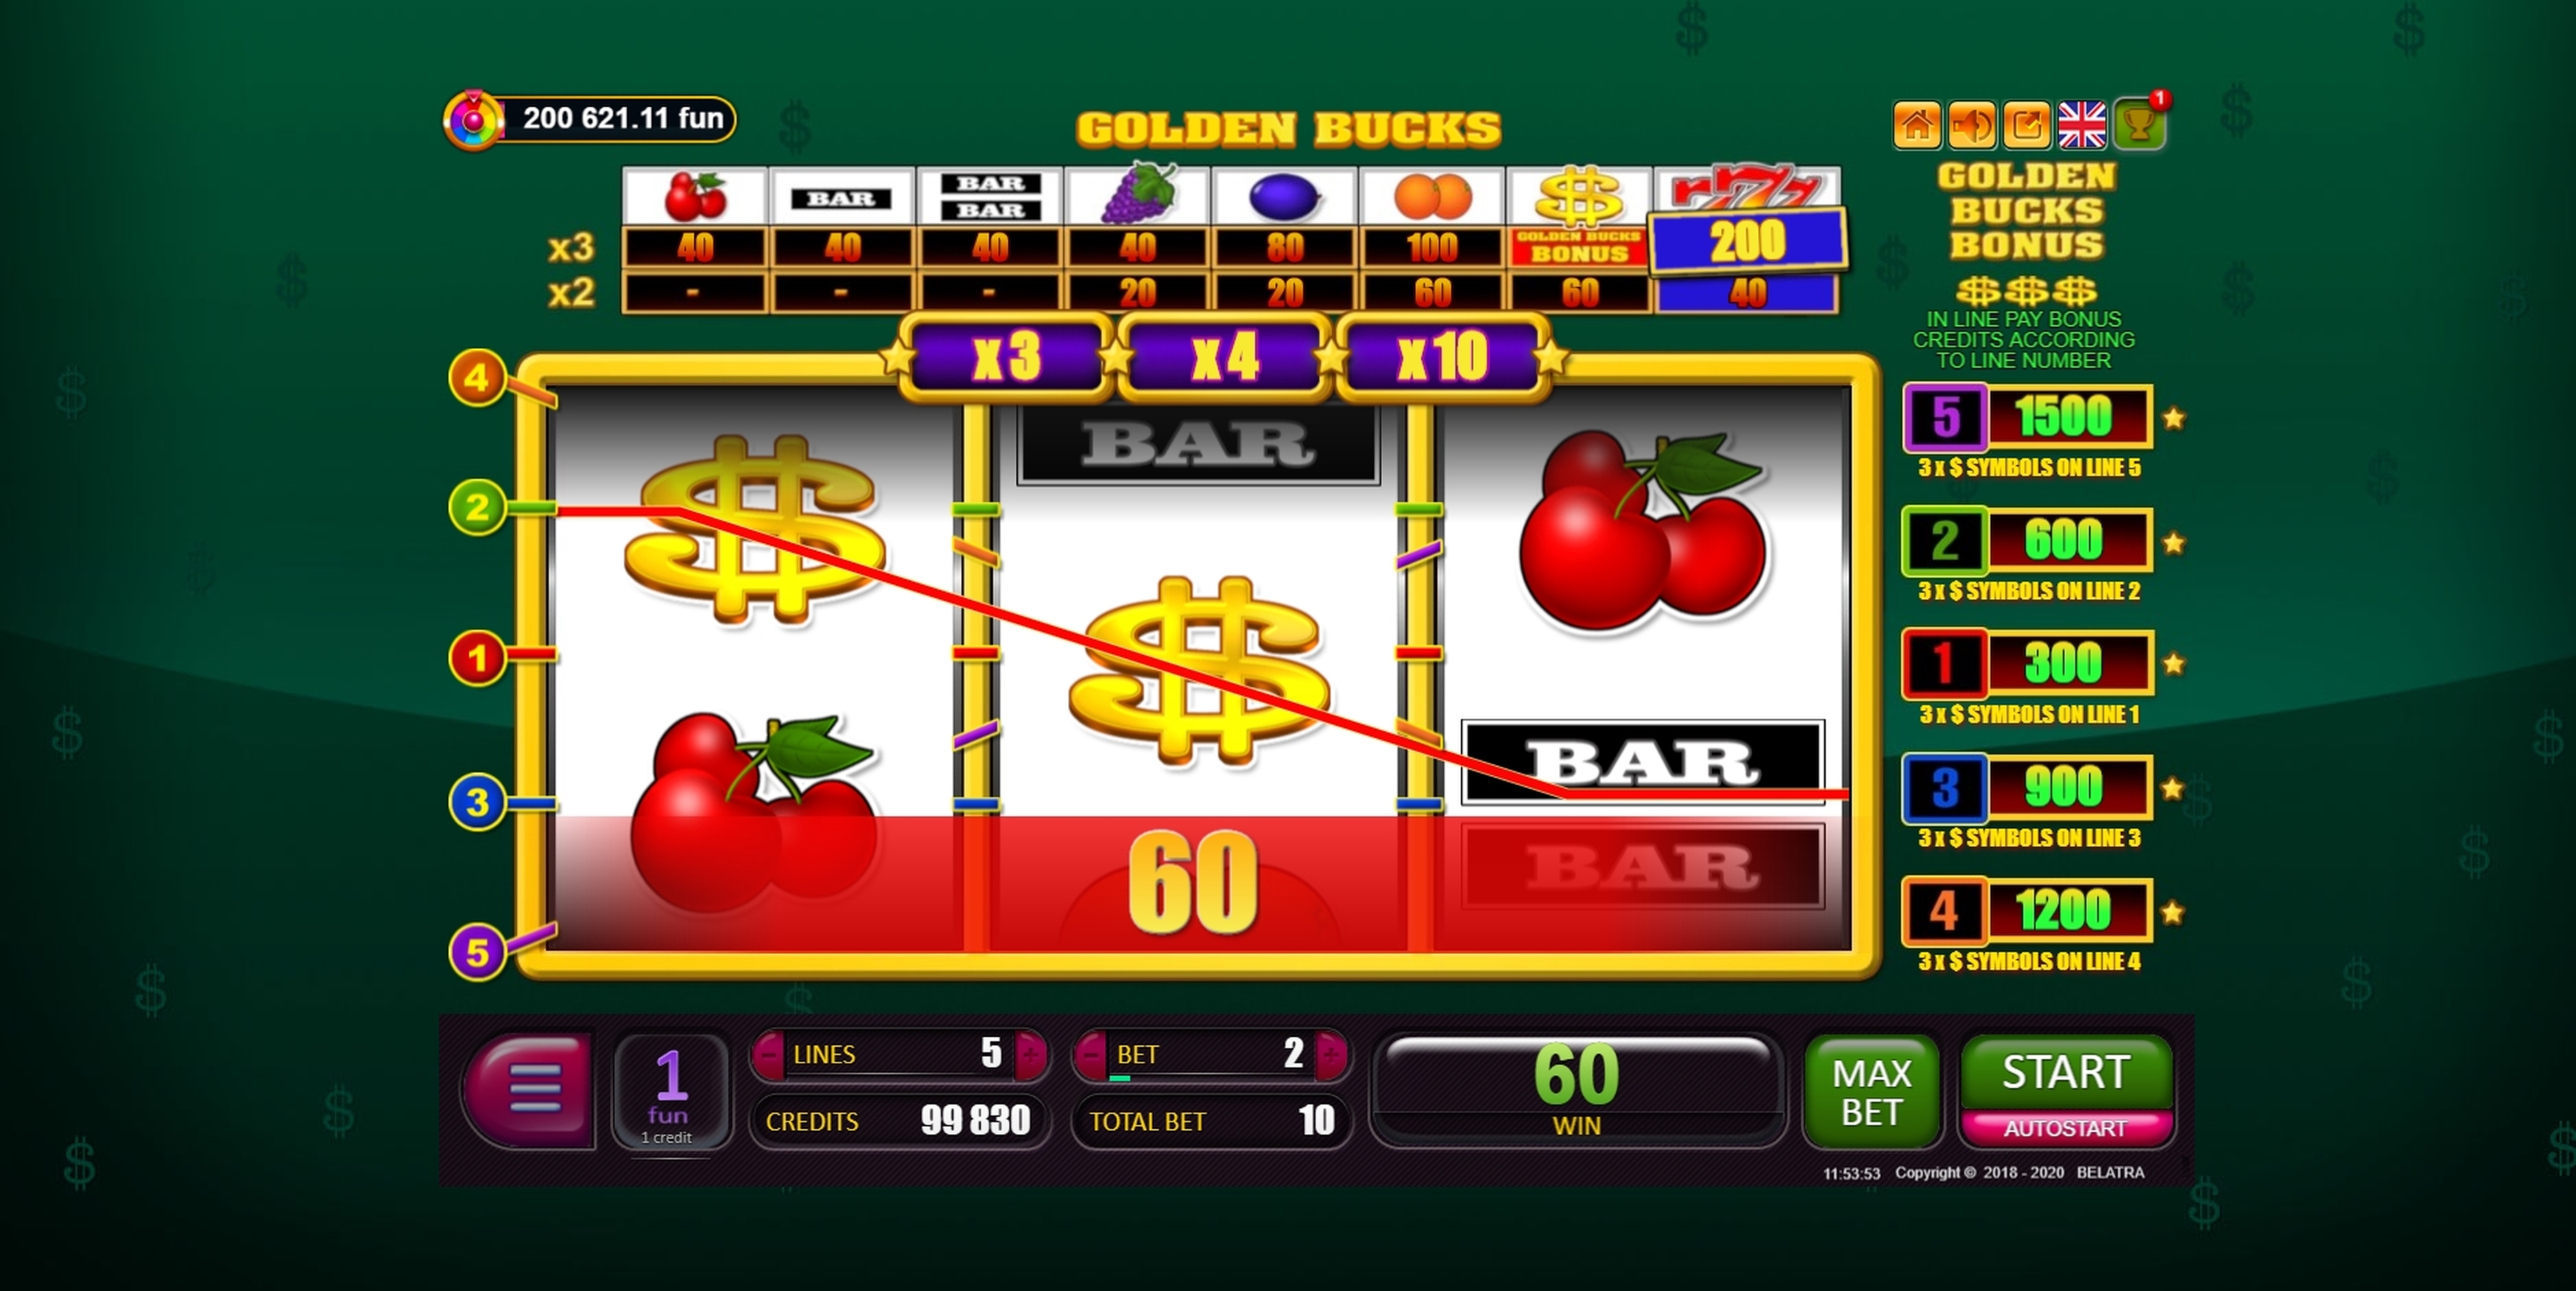 Win Money in Golden Bucks Free Slot Game by Belatra Games